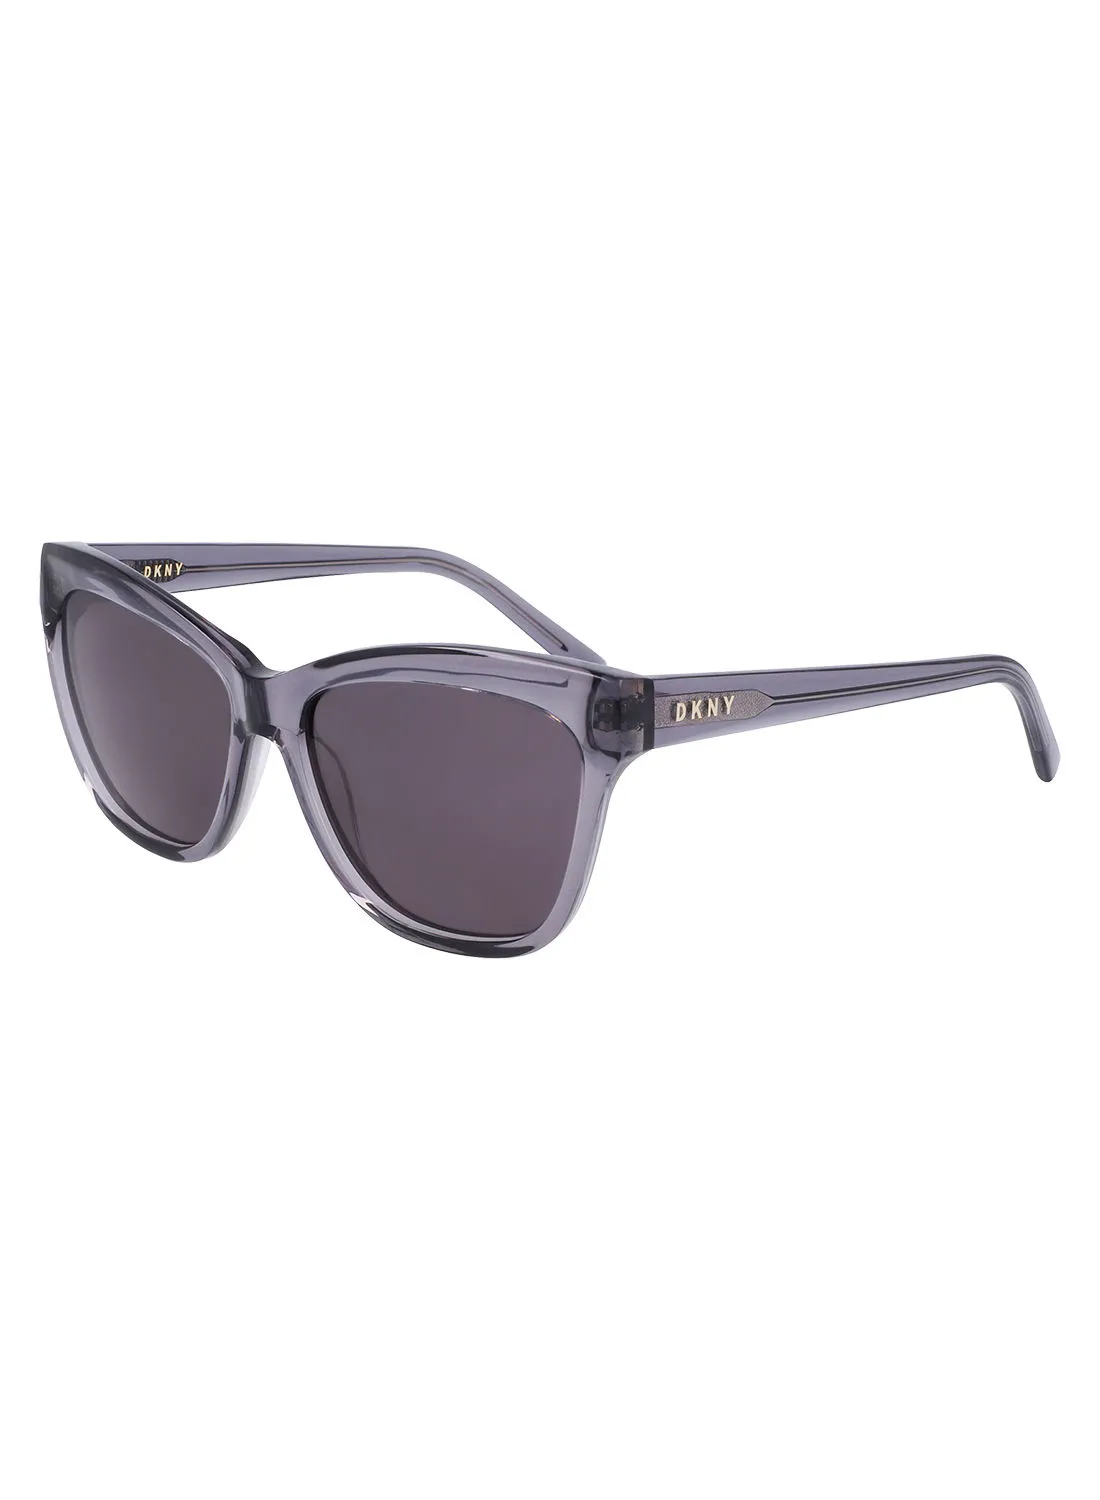 DKNY Full Rim Acetate Cat Eye Sunglasses Dk543S 5516 (014) Crystal